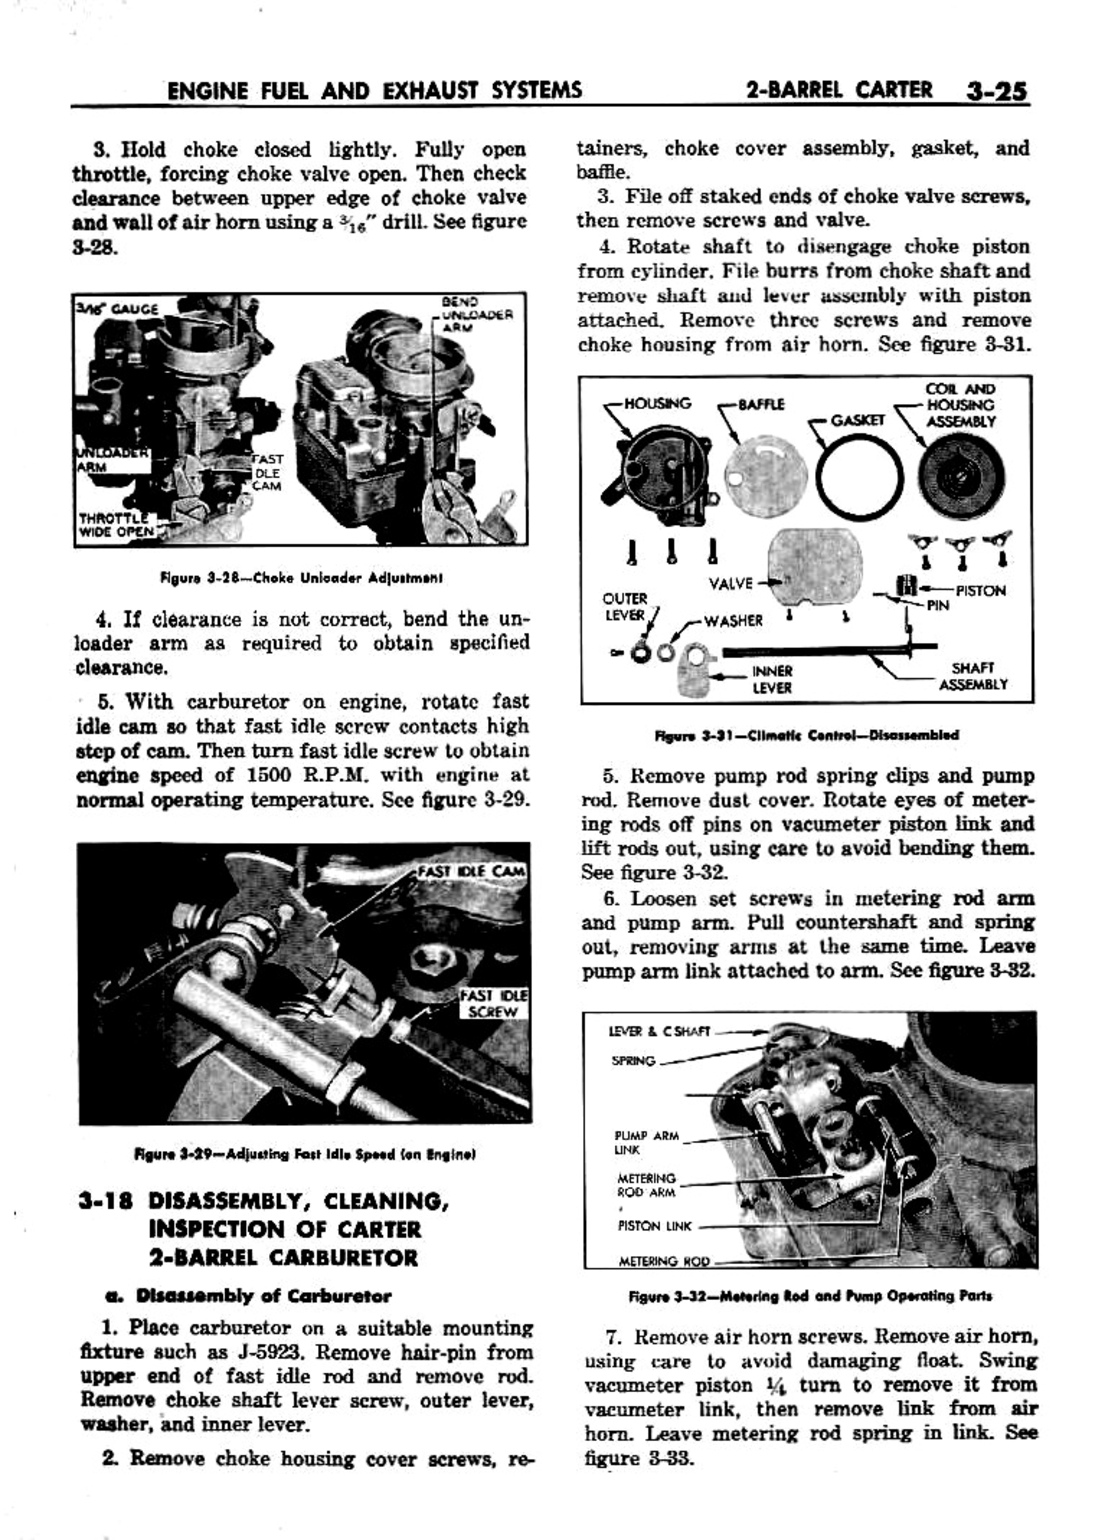 n_04 1959 Buick Shop Manual - Engine Fuel & Exhaust-025-025.jpg